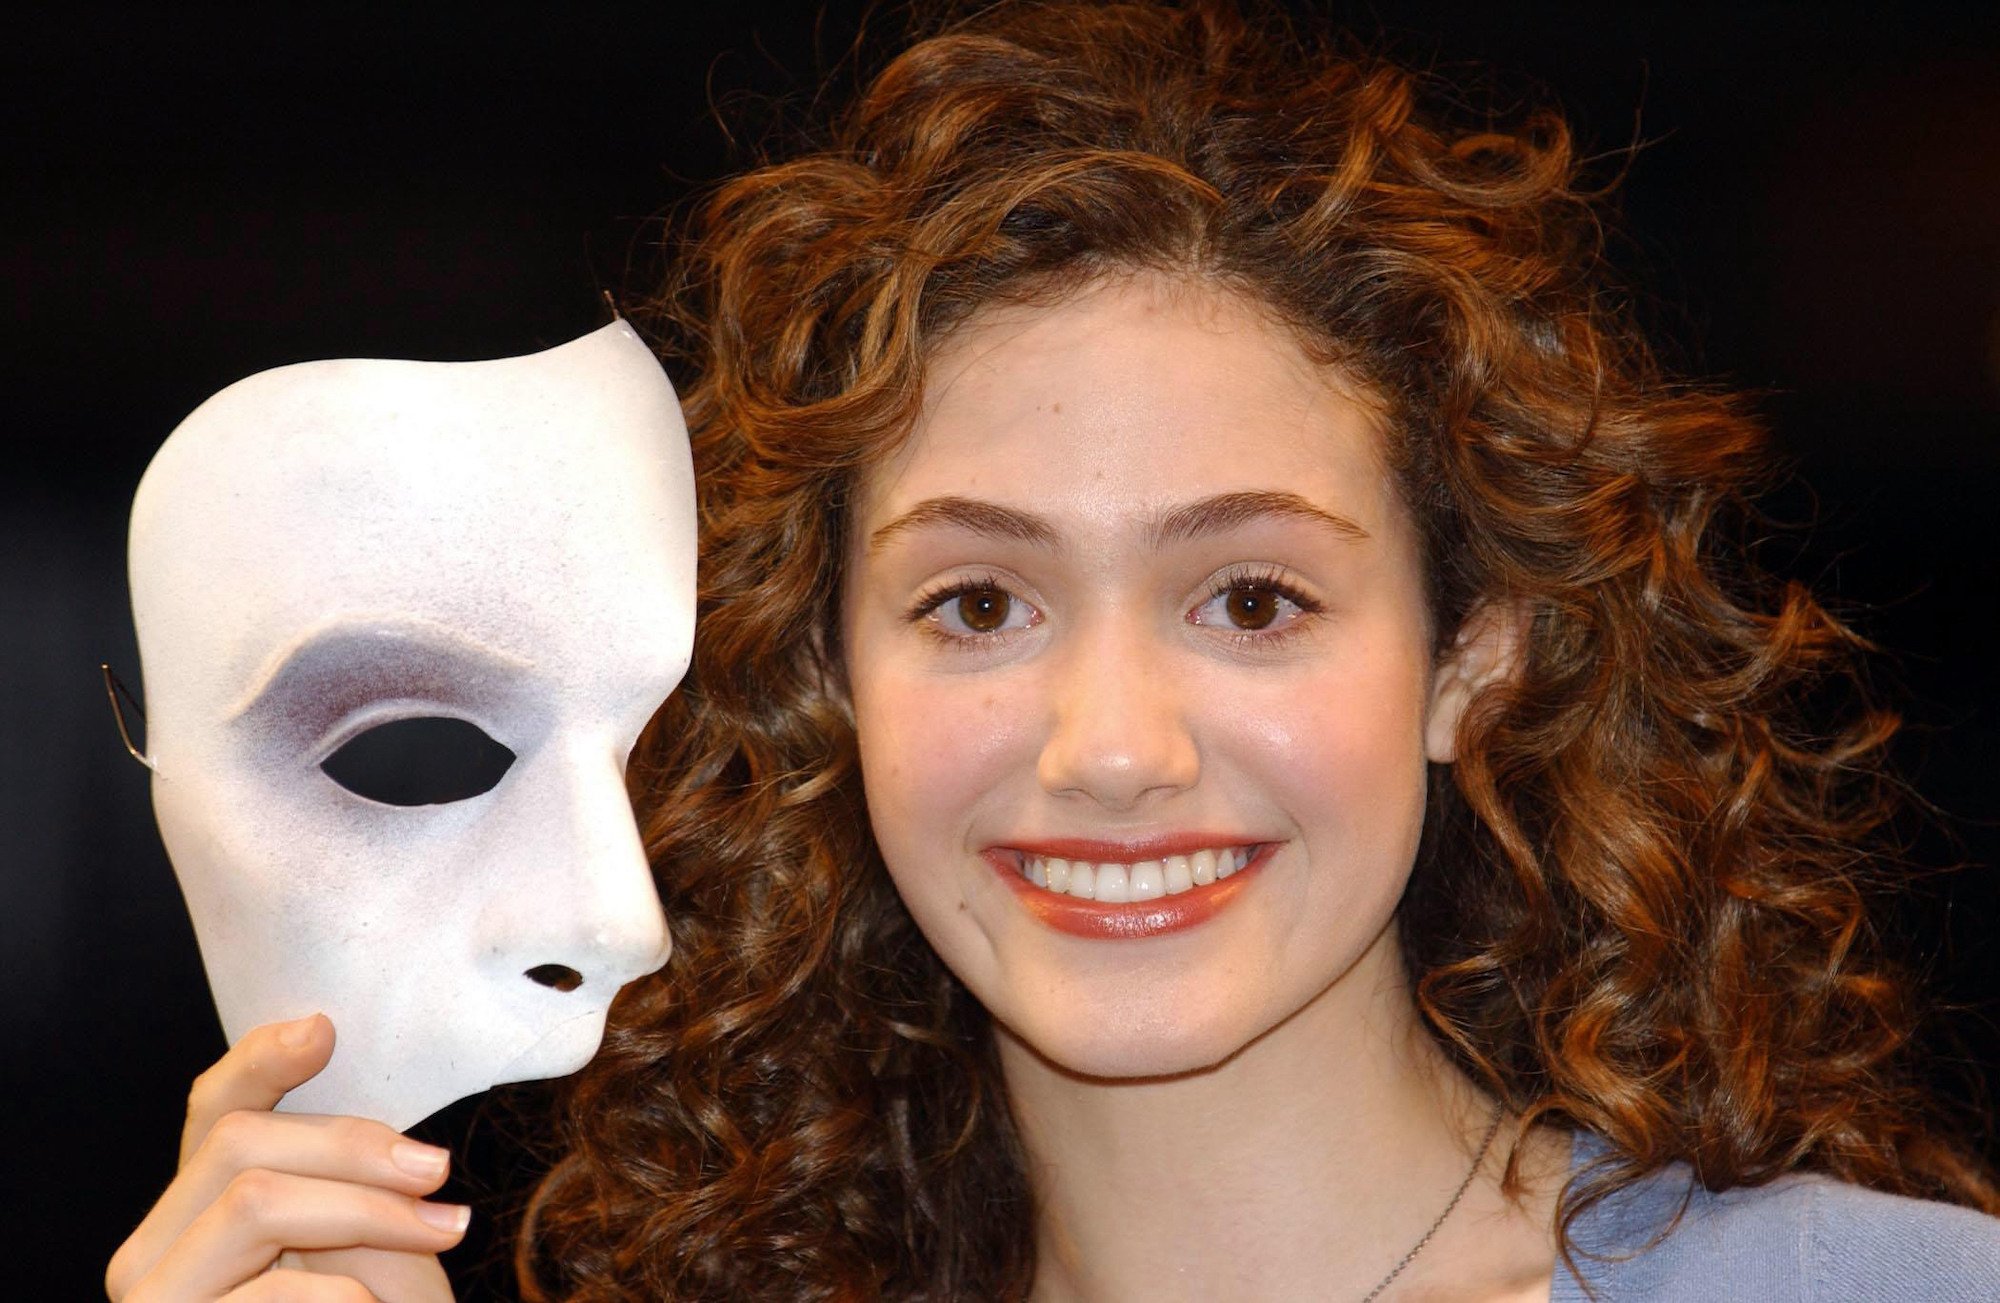 Emmy Rossum promoting 'The Phantom of the Opera' film in London 